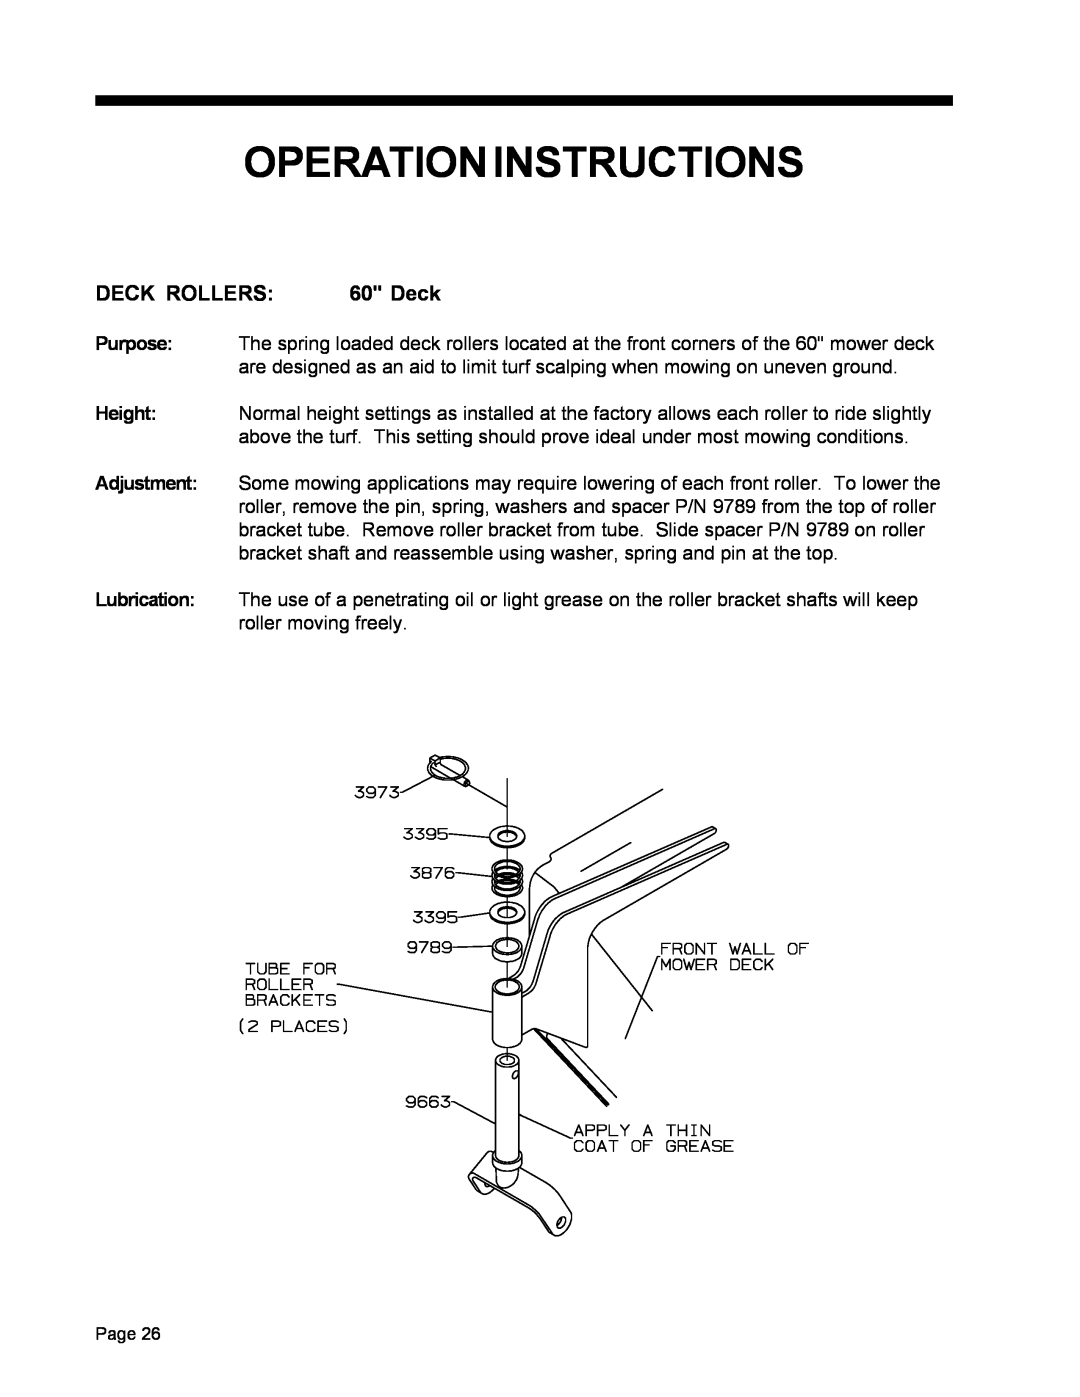 Dixon ZTR 5022, ZTR 5017 manual Operation Instructions, Deck Rollers 